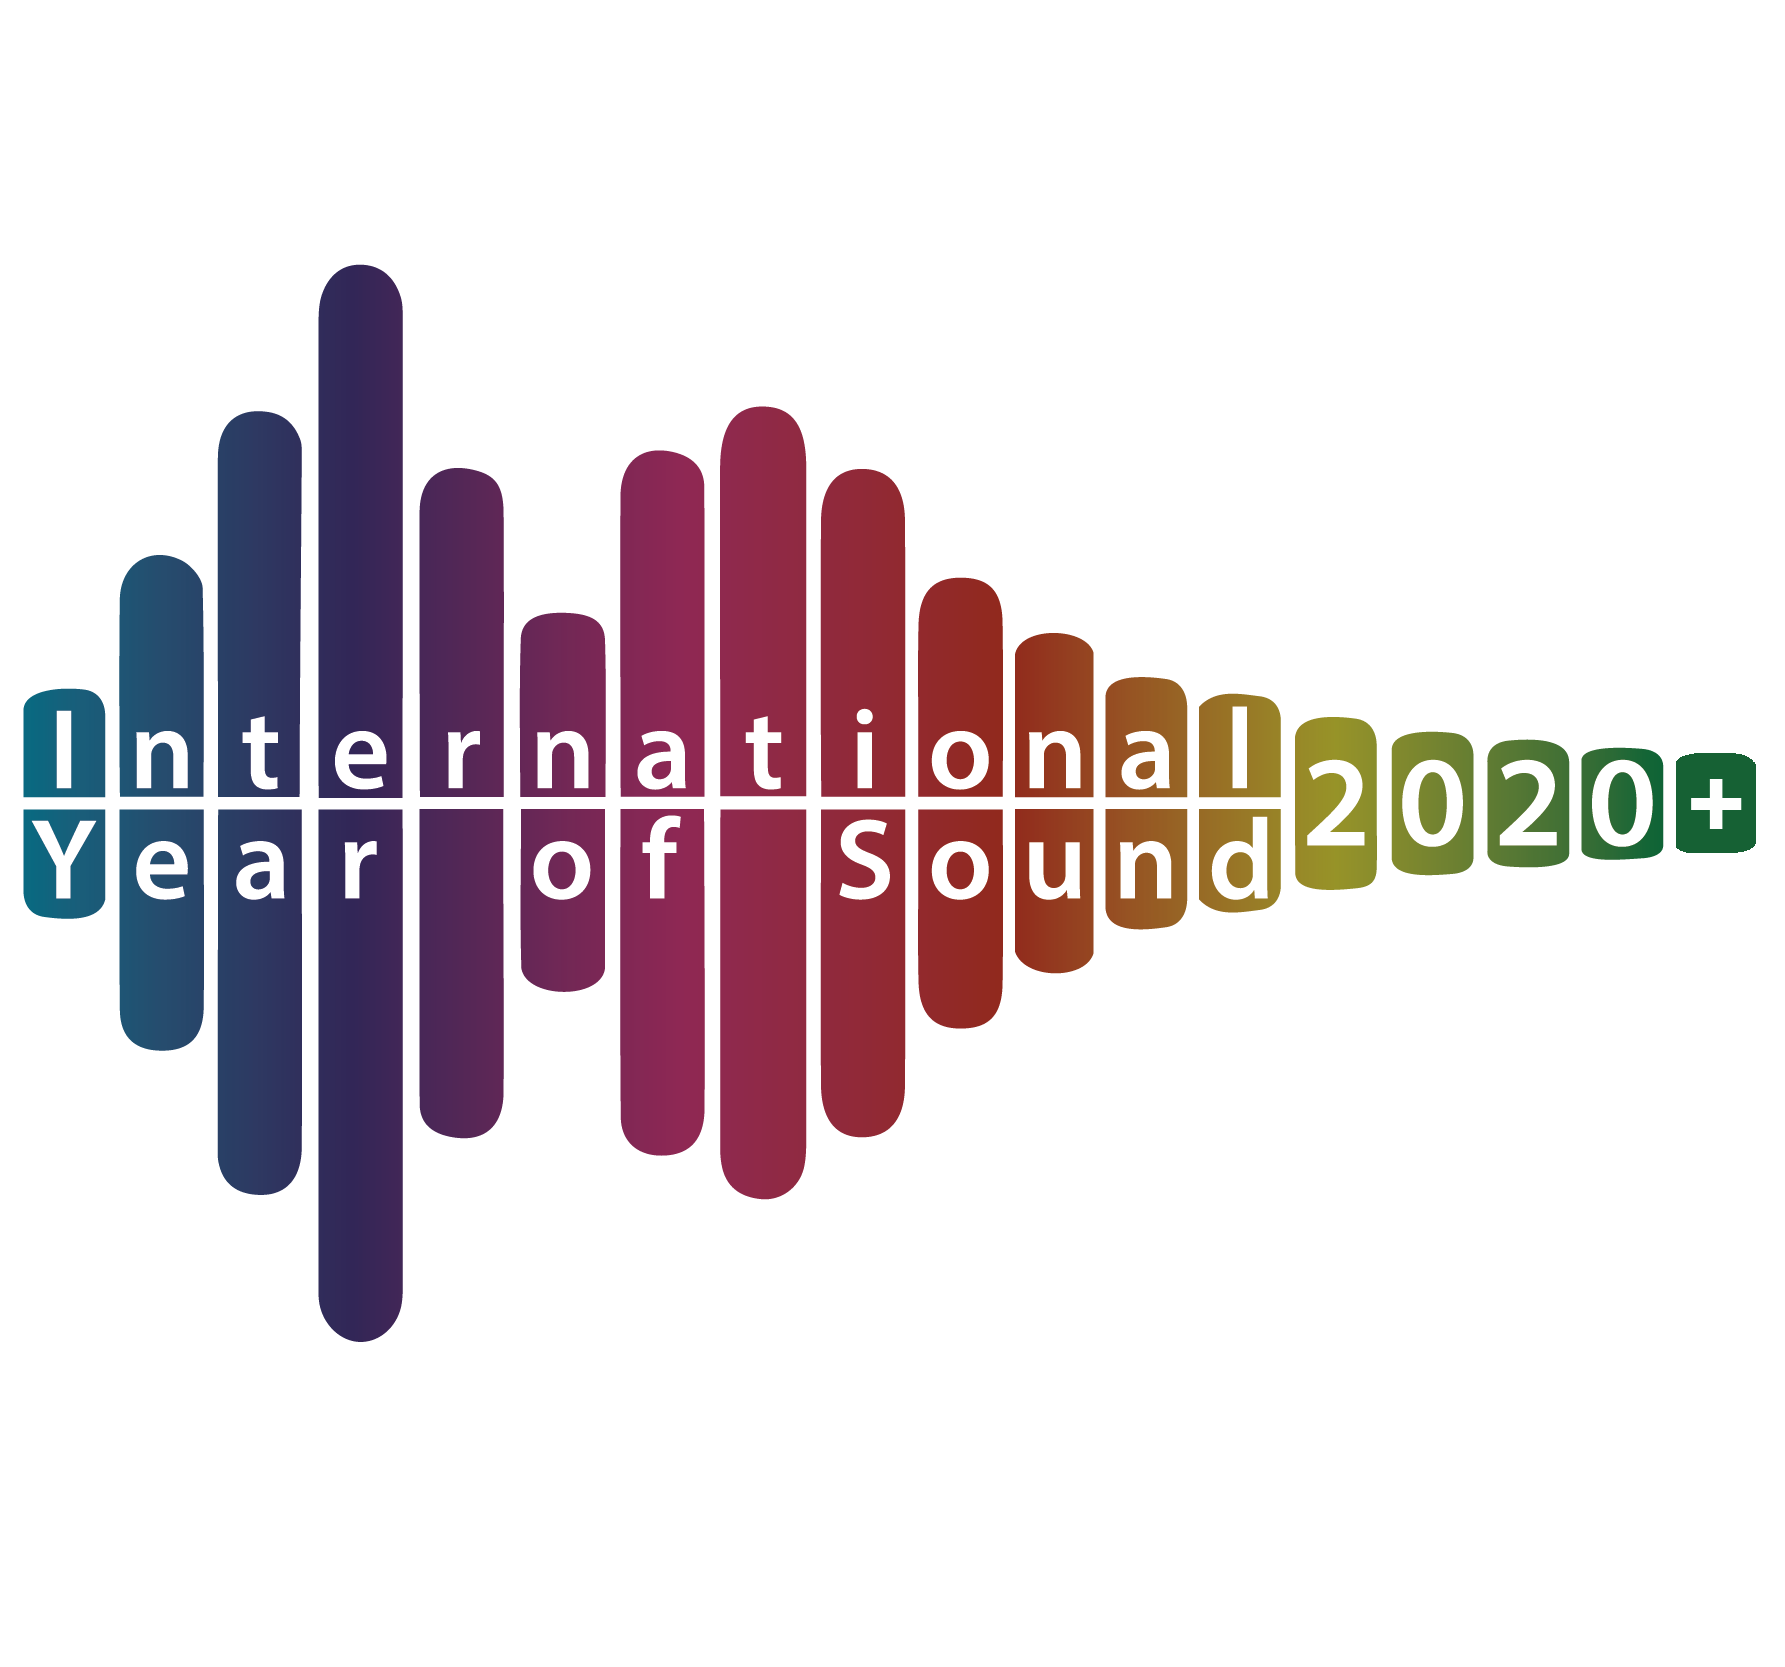 International Year of Sound